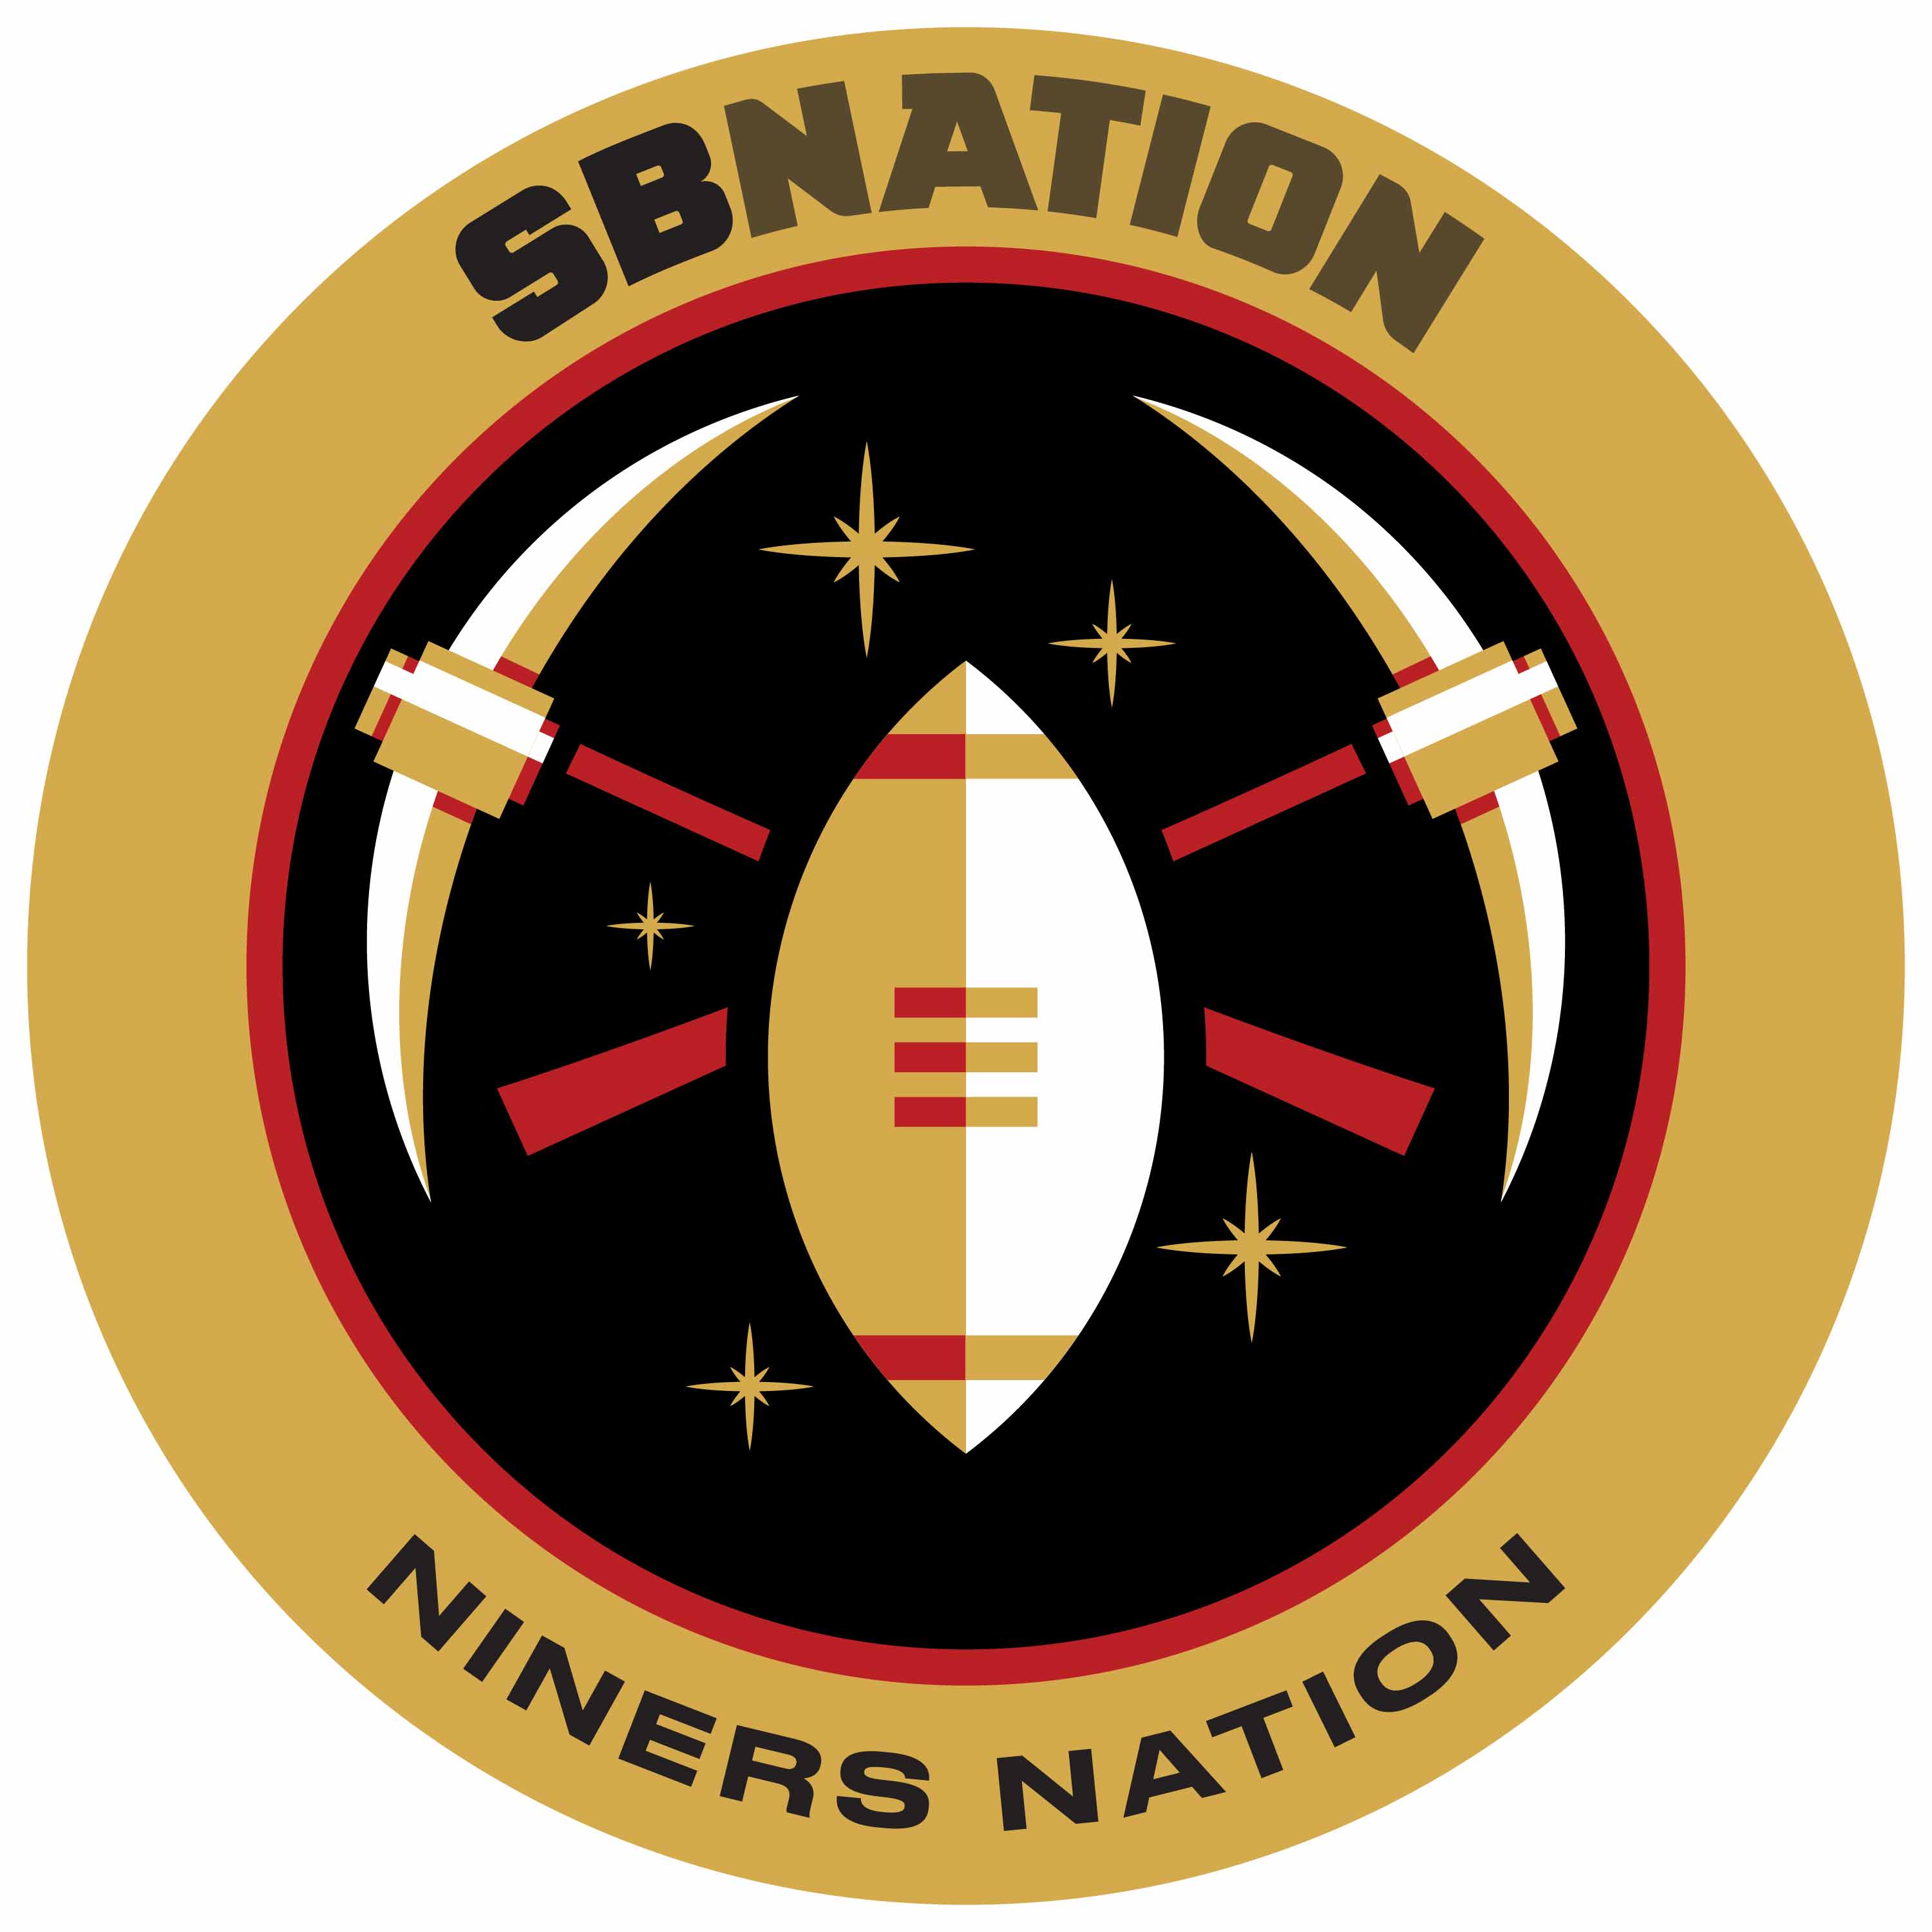 Niners Nation